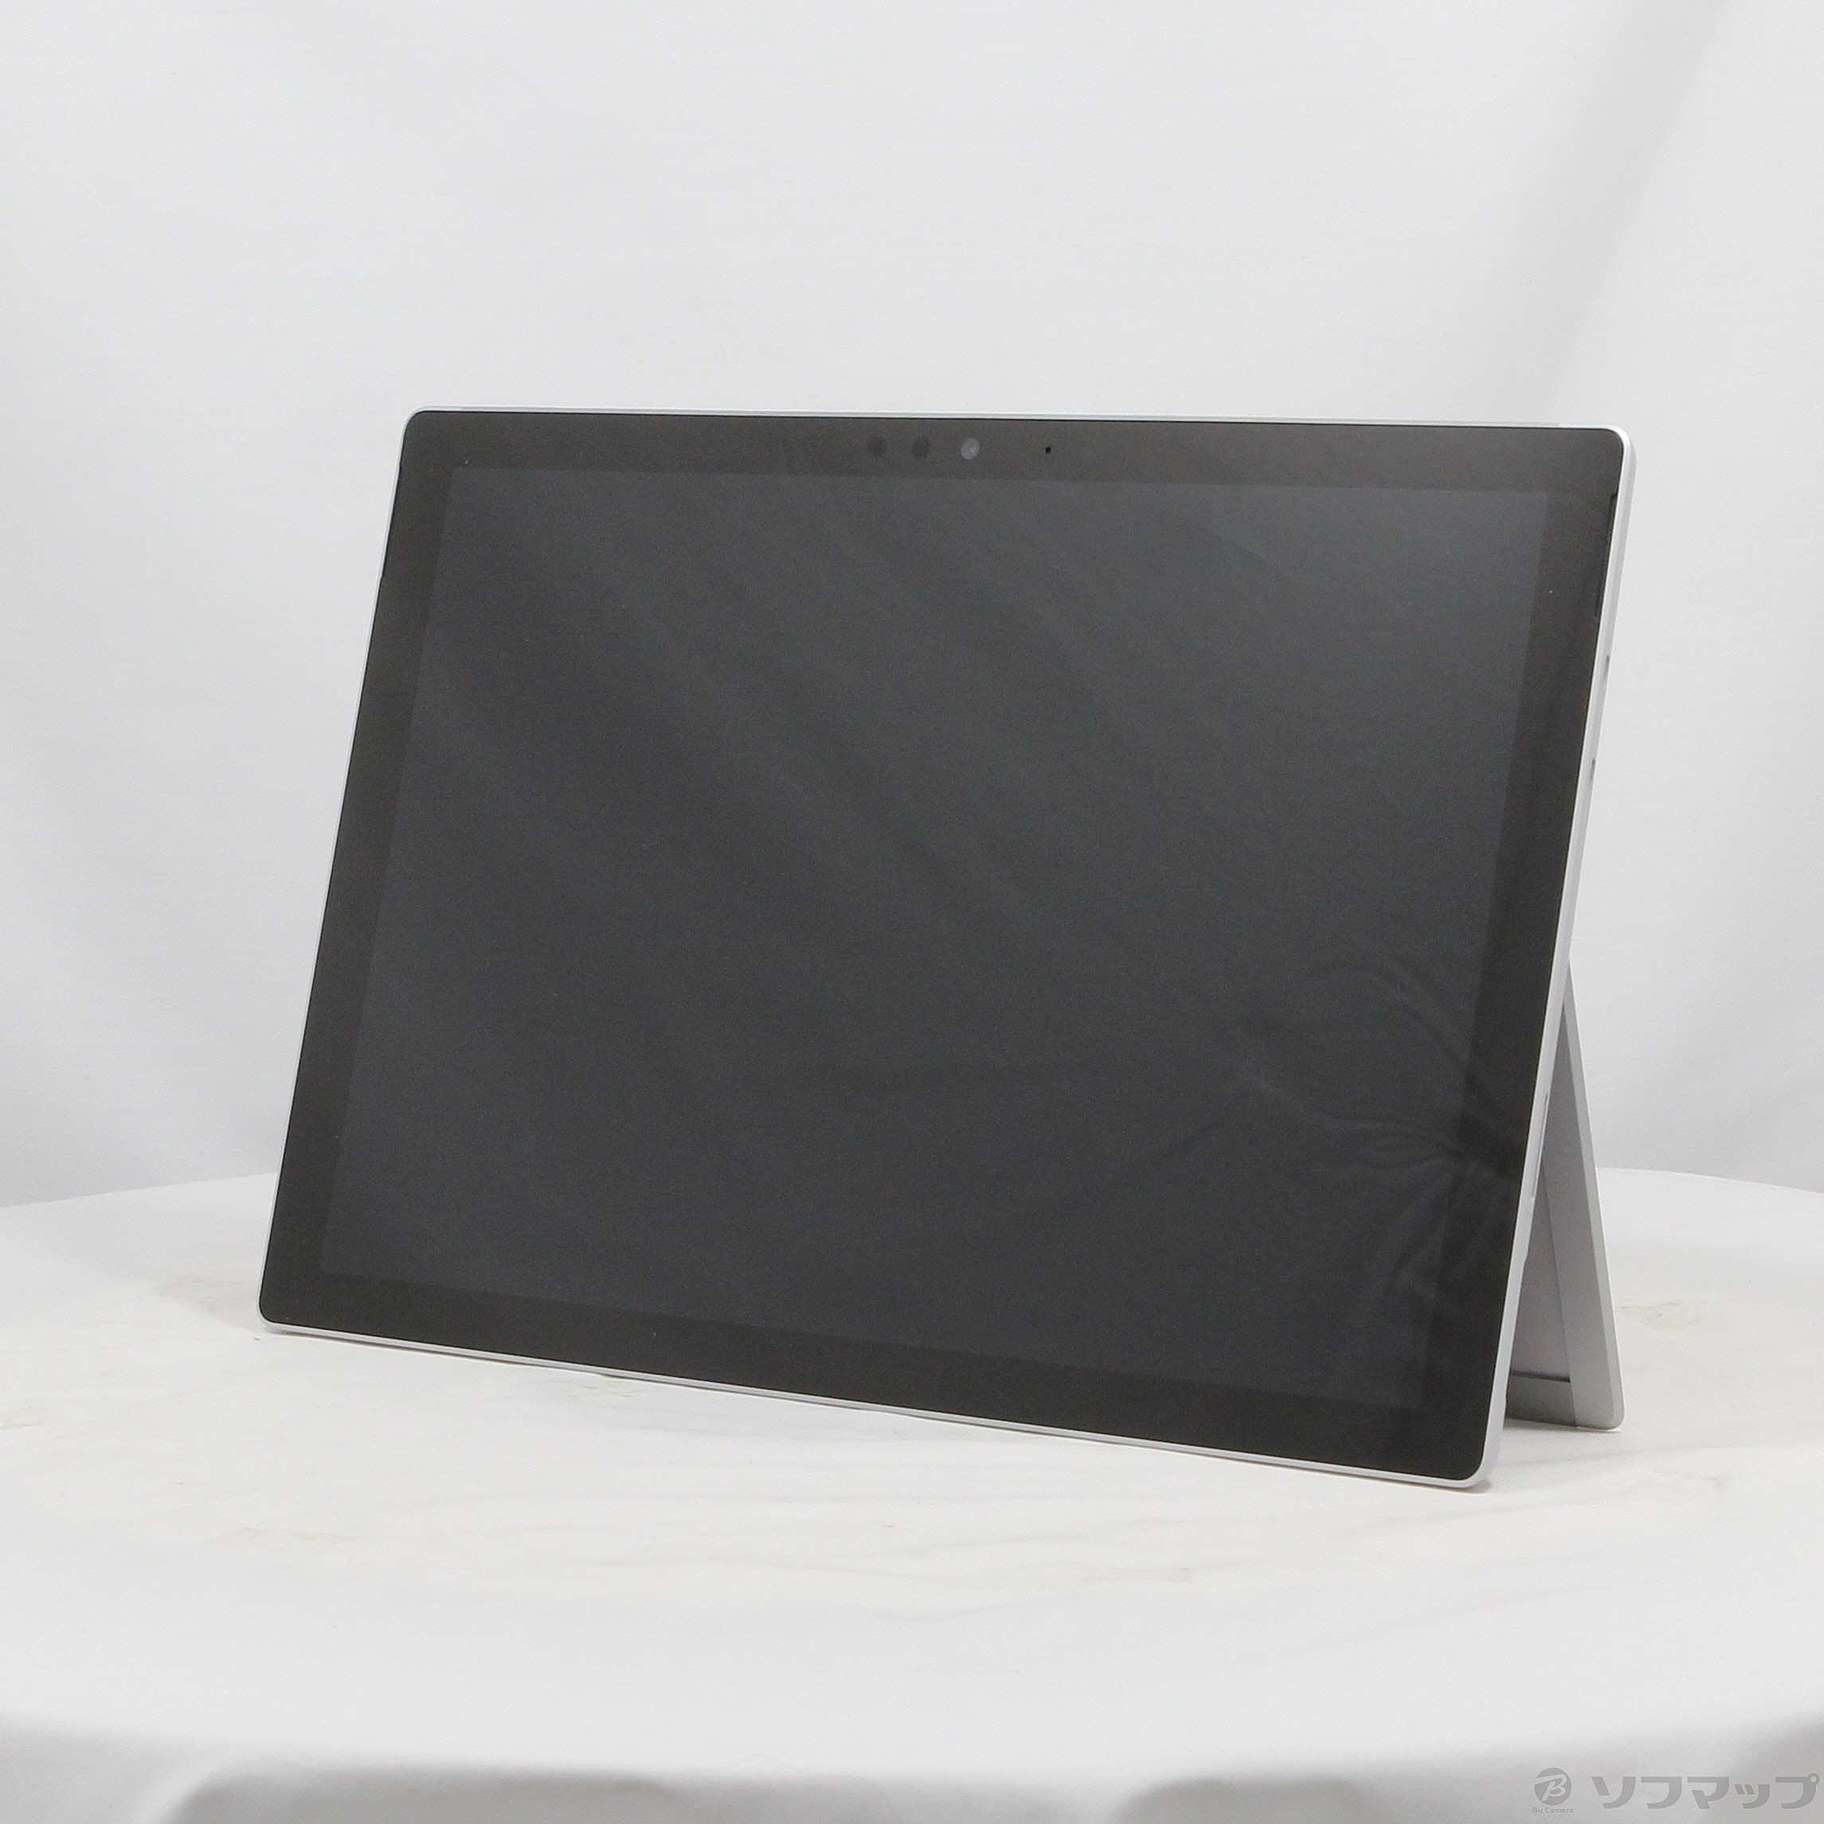 【新品】Microsoft Surface Pro6  KJT-00027